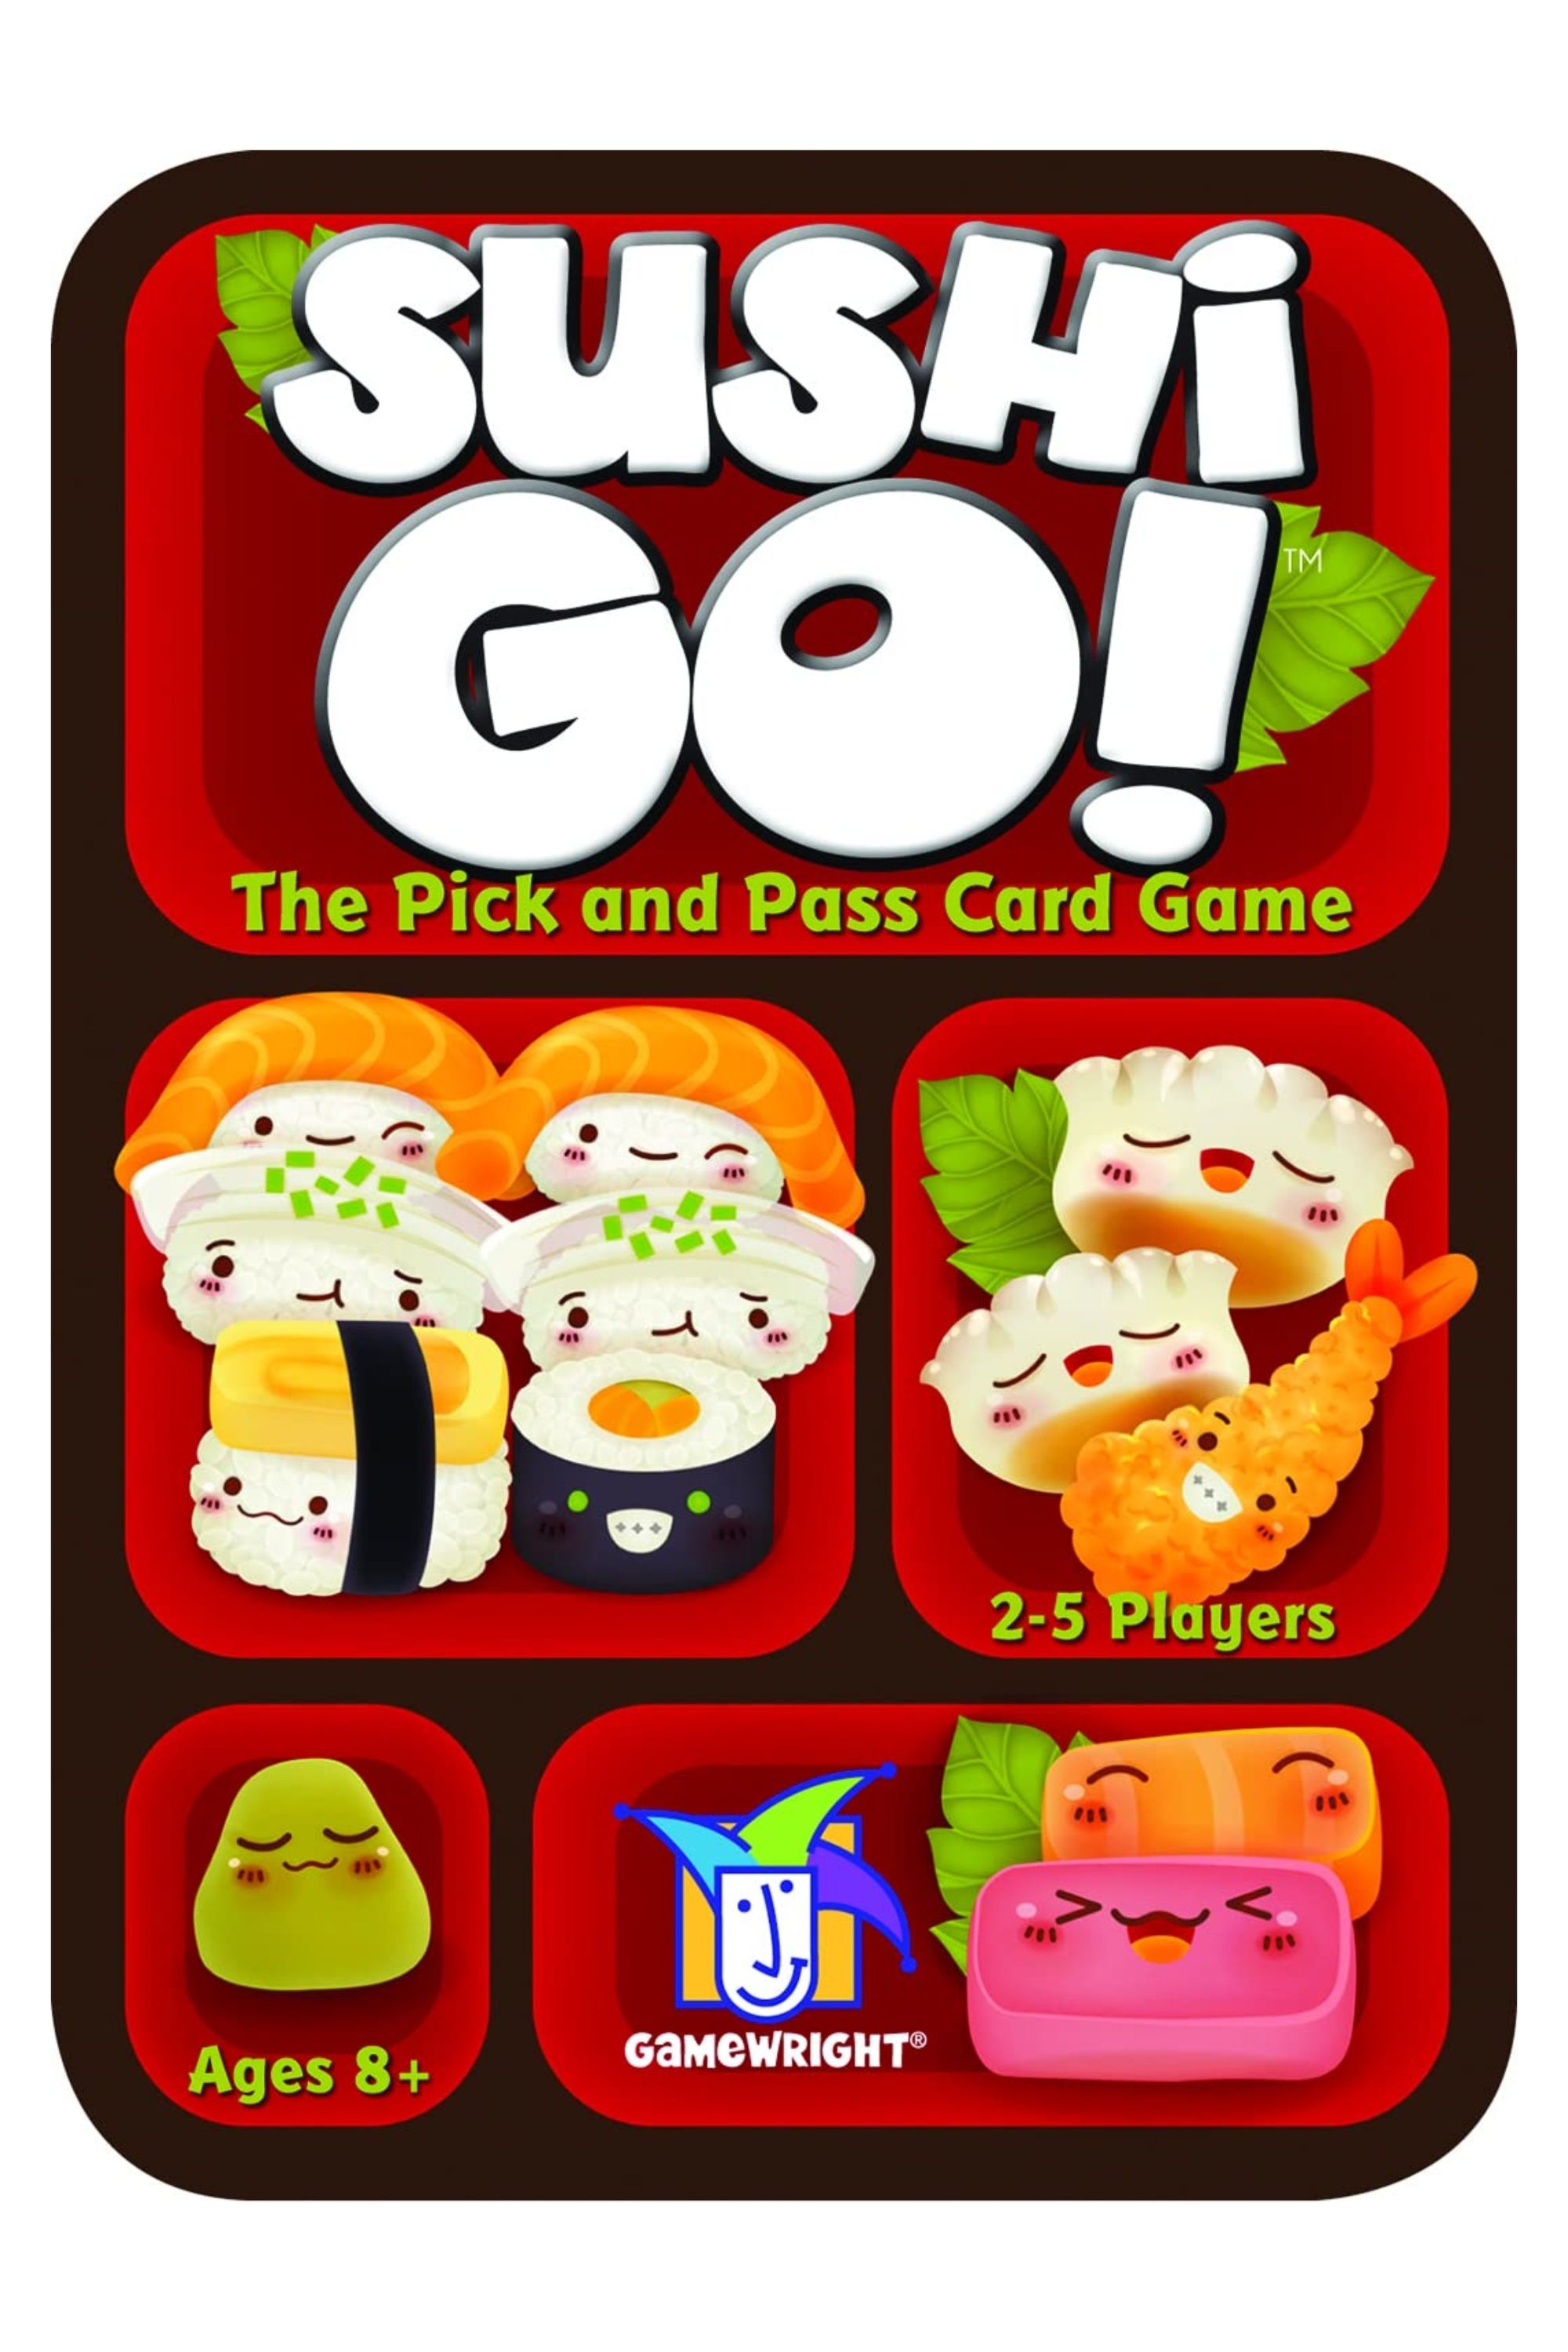 Sushi Go! card game box